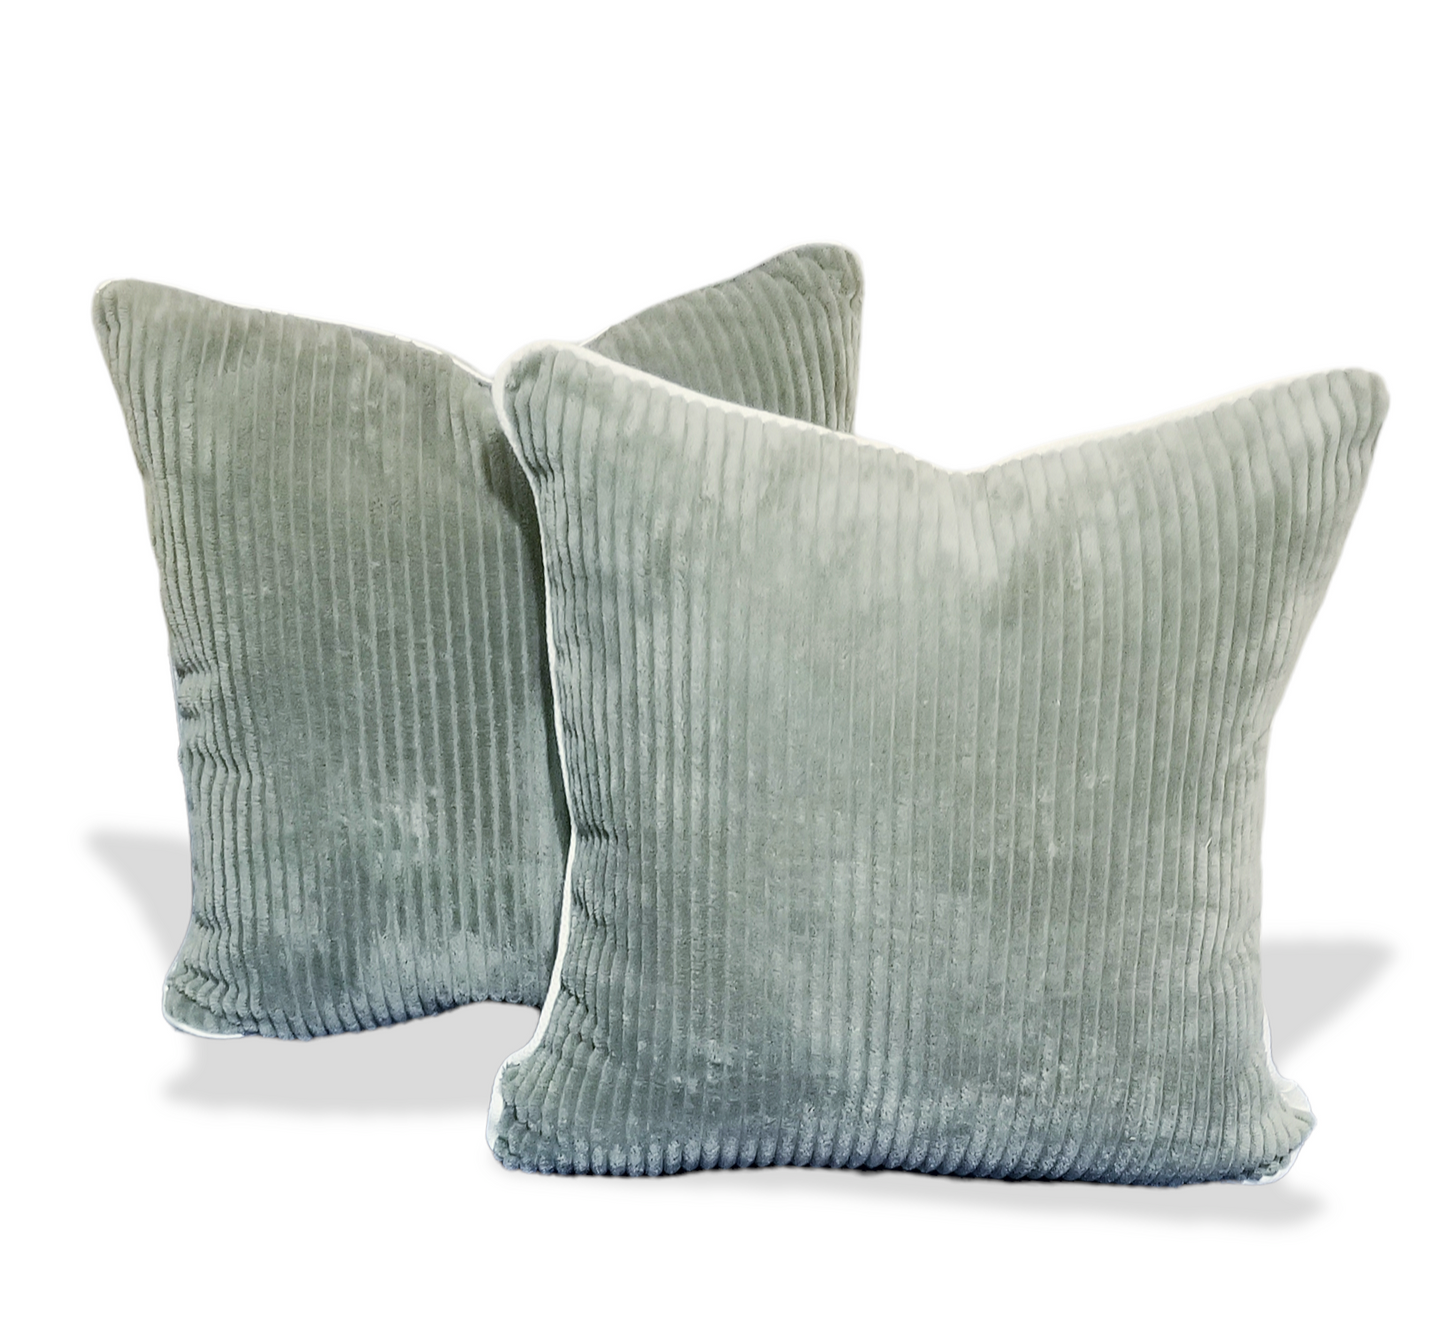 Luxury Grey and Silver Decorative Pillow - Advenique Home Decor